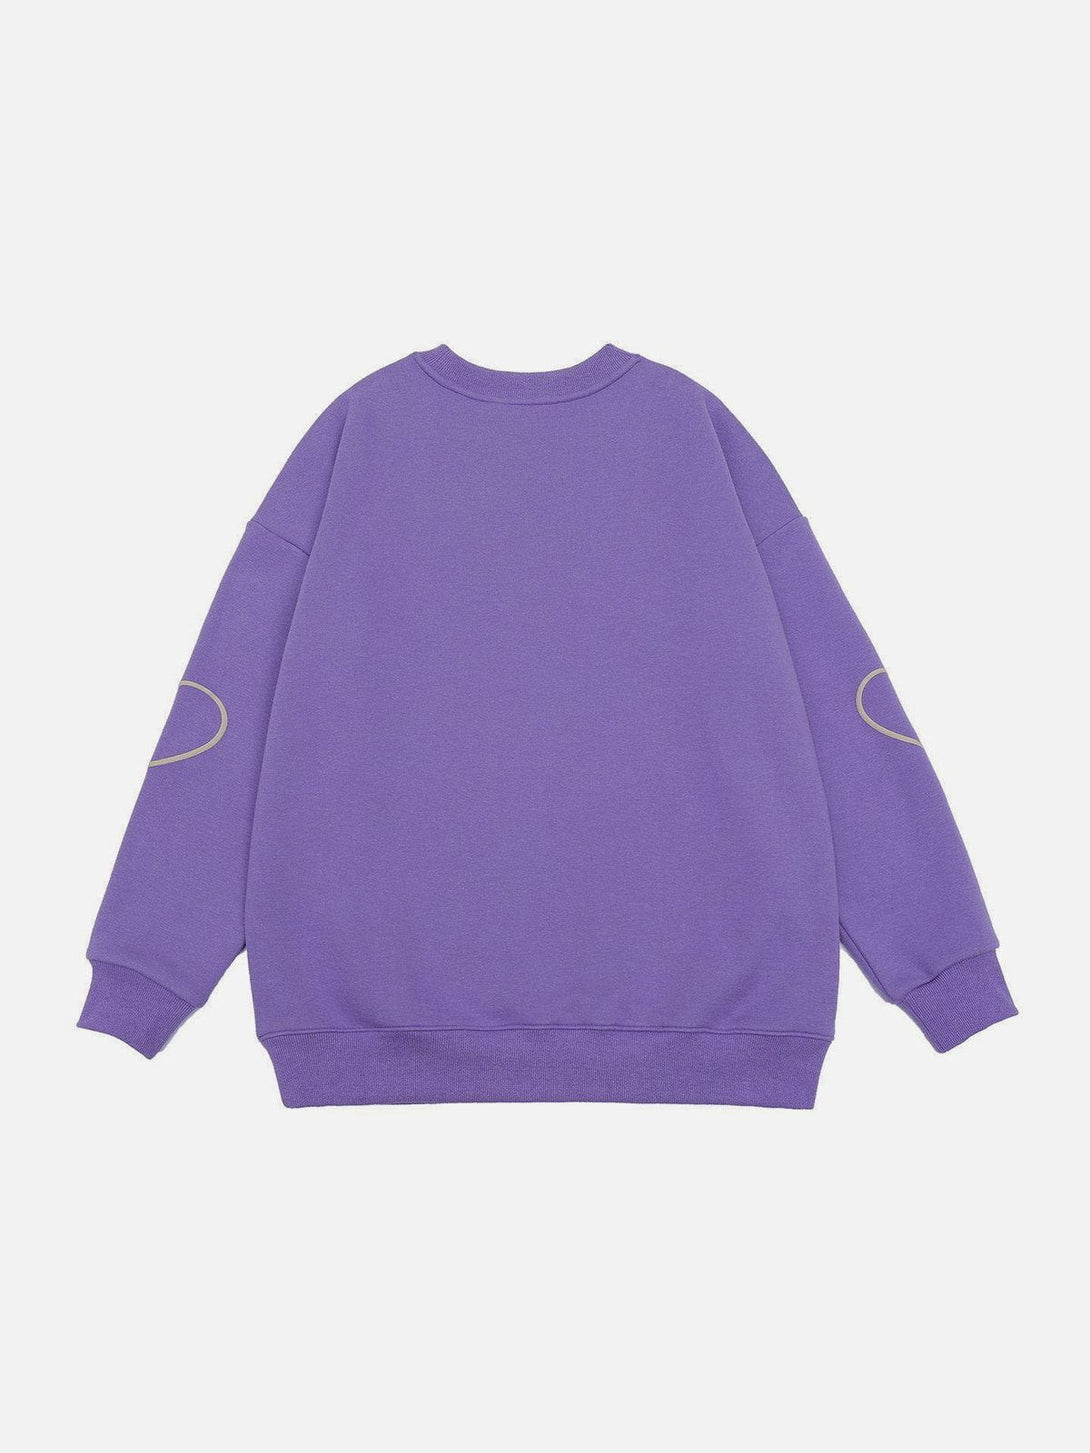 Levefly - Sleeve Heart Print Sweatshirt - Streetwear Fashion - levefly.com